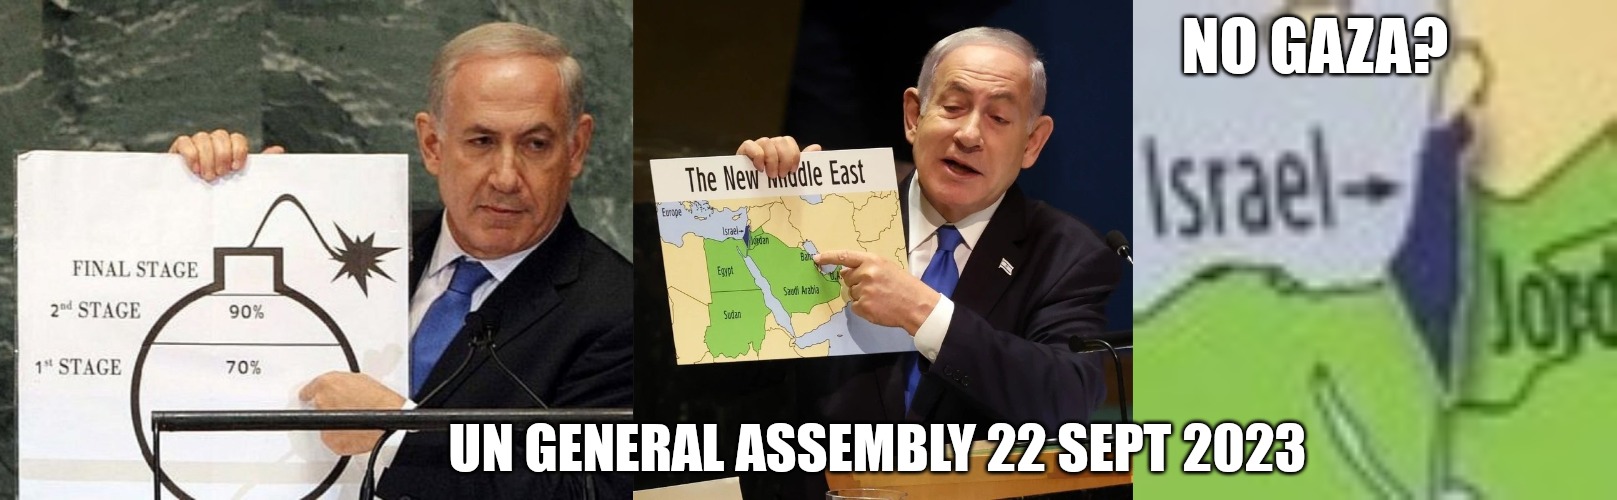 Netanyahu - UN General Assembly 22 Sept 2023 | NO GAZA? UN GENERAL ASSEMBLY 22 SEPT 2023 | image tagged in israel,war criminal | made w/ Imgflip meme maker